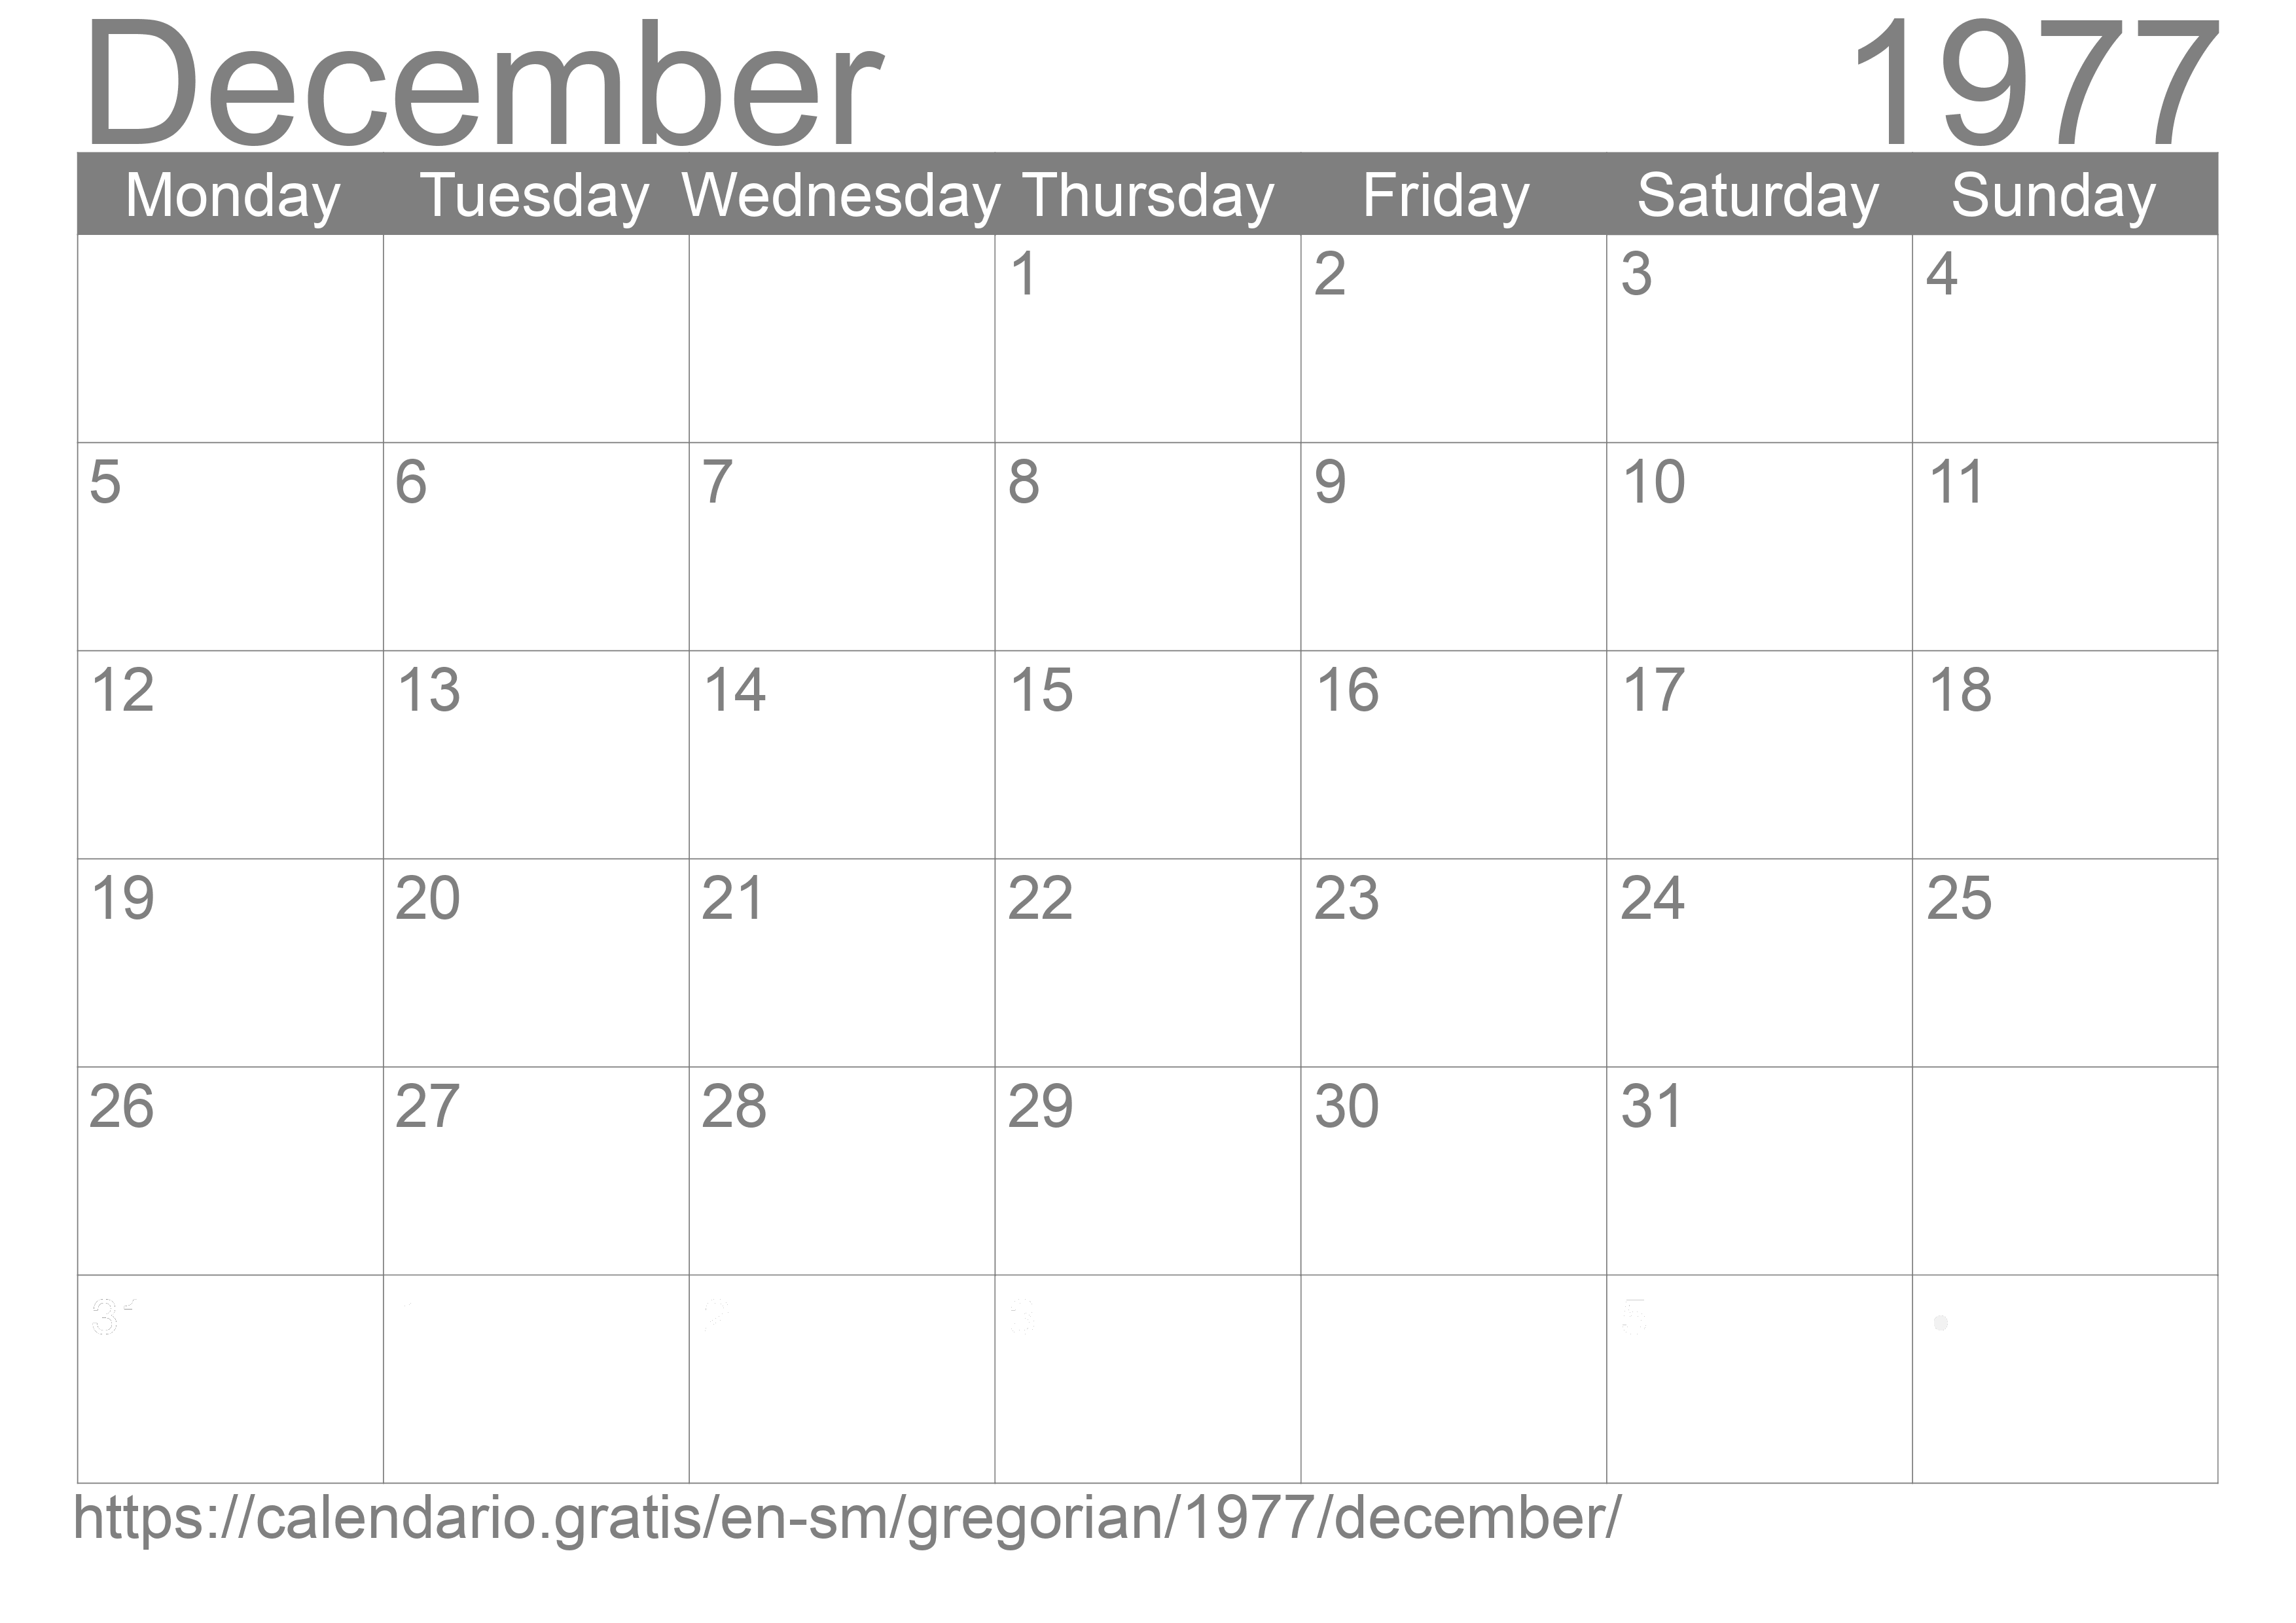 Calendar December 1977 to print